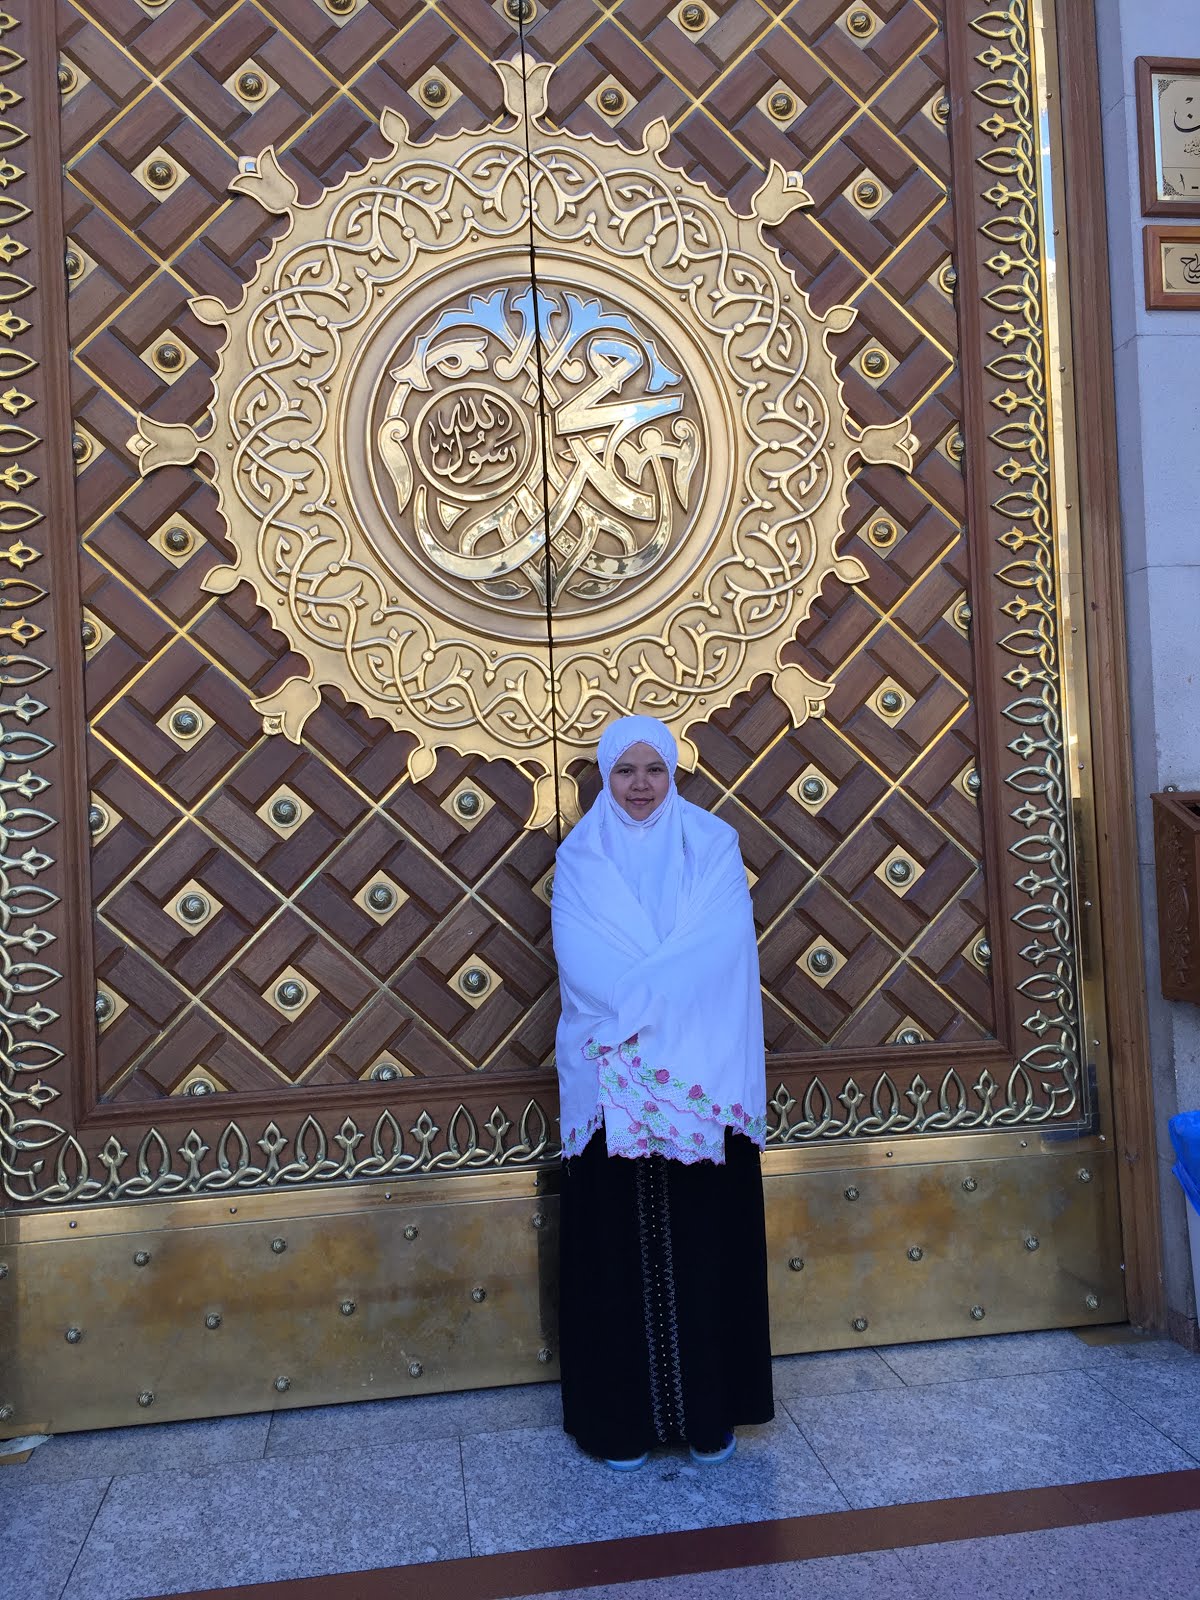 Places I've been to...Mecca & Medina, Saudi Arabia